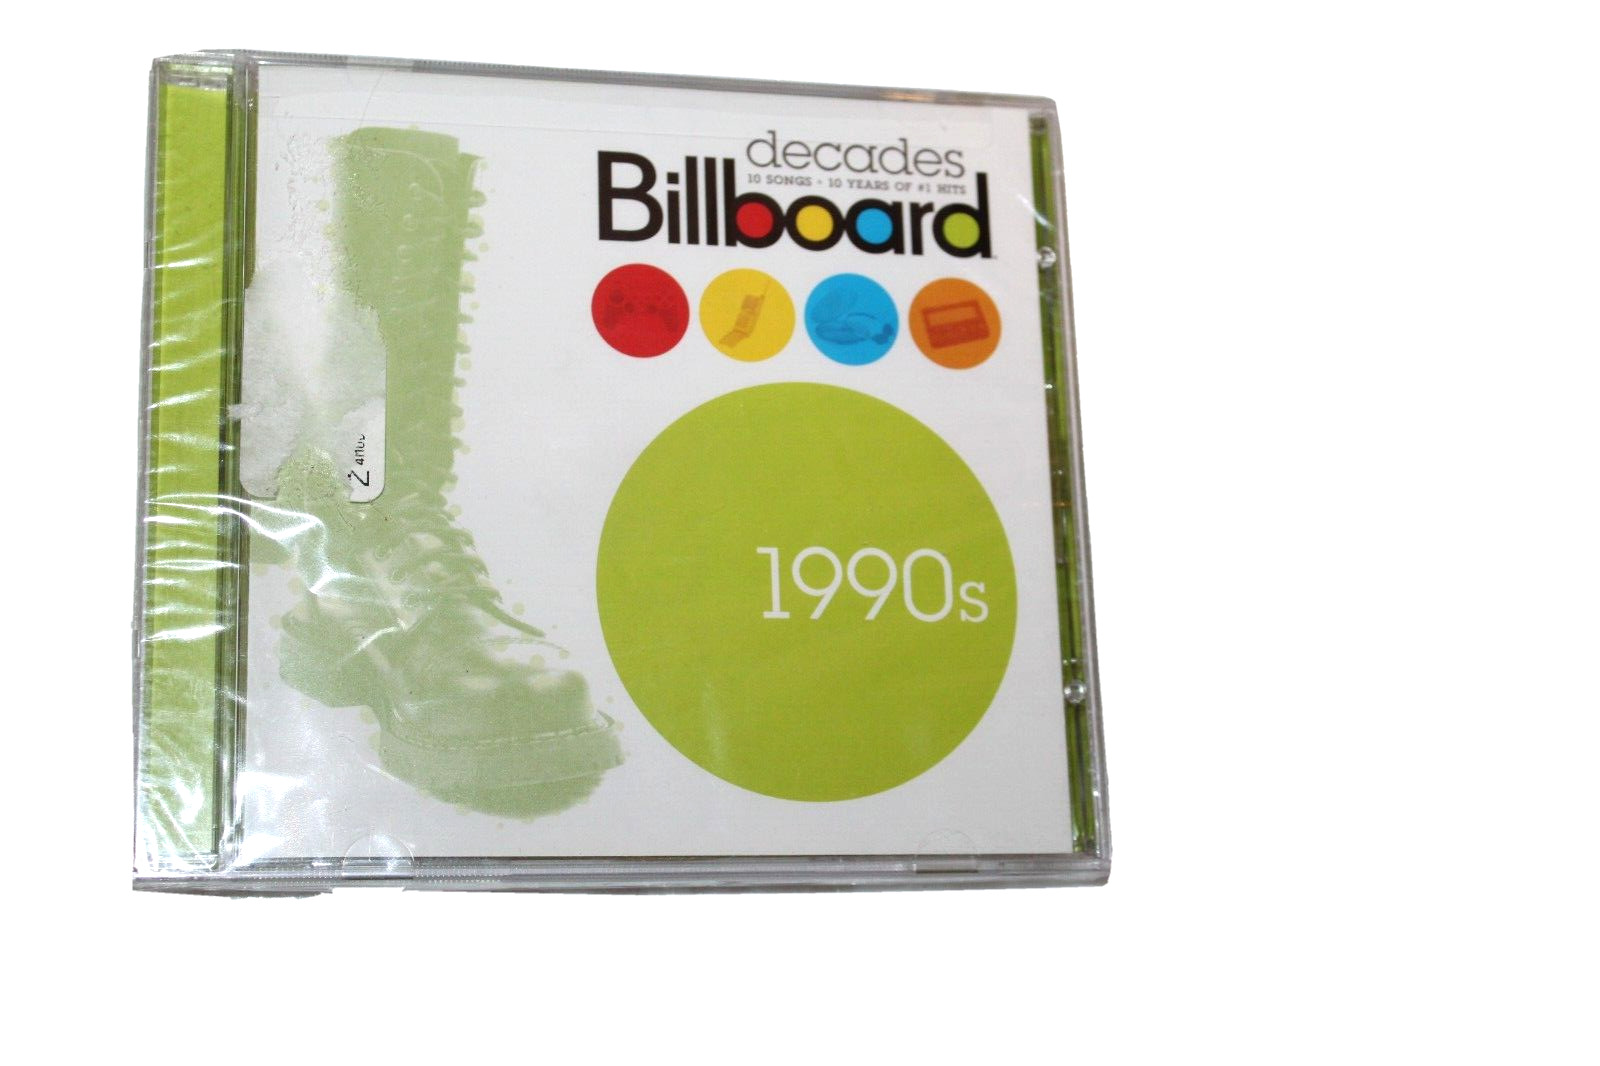 Billboard Decades CD 1990s Spin Doctors Mr Big Seal Sugar Ray